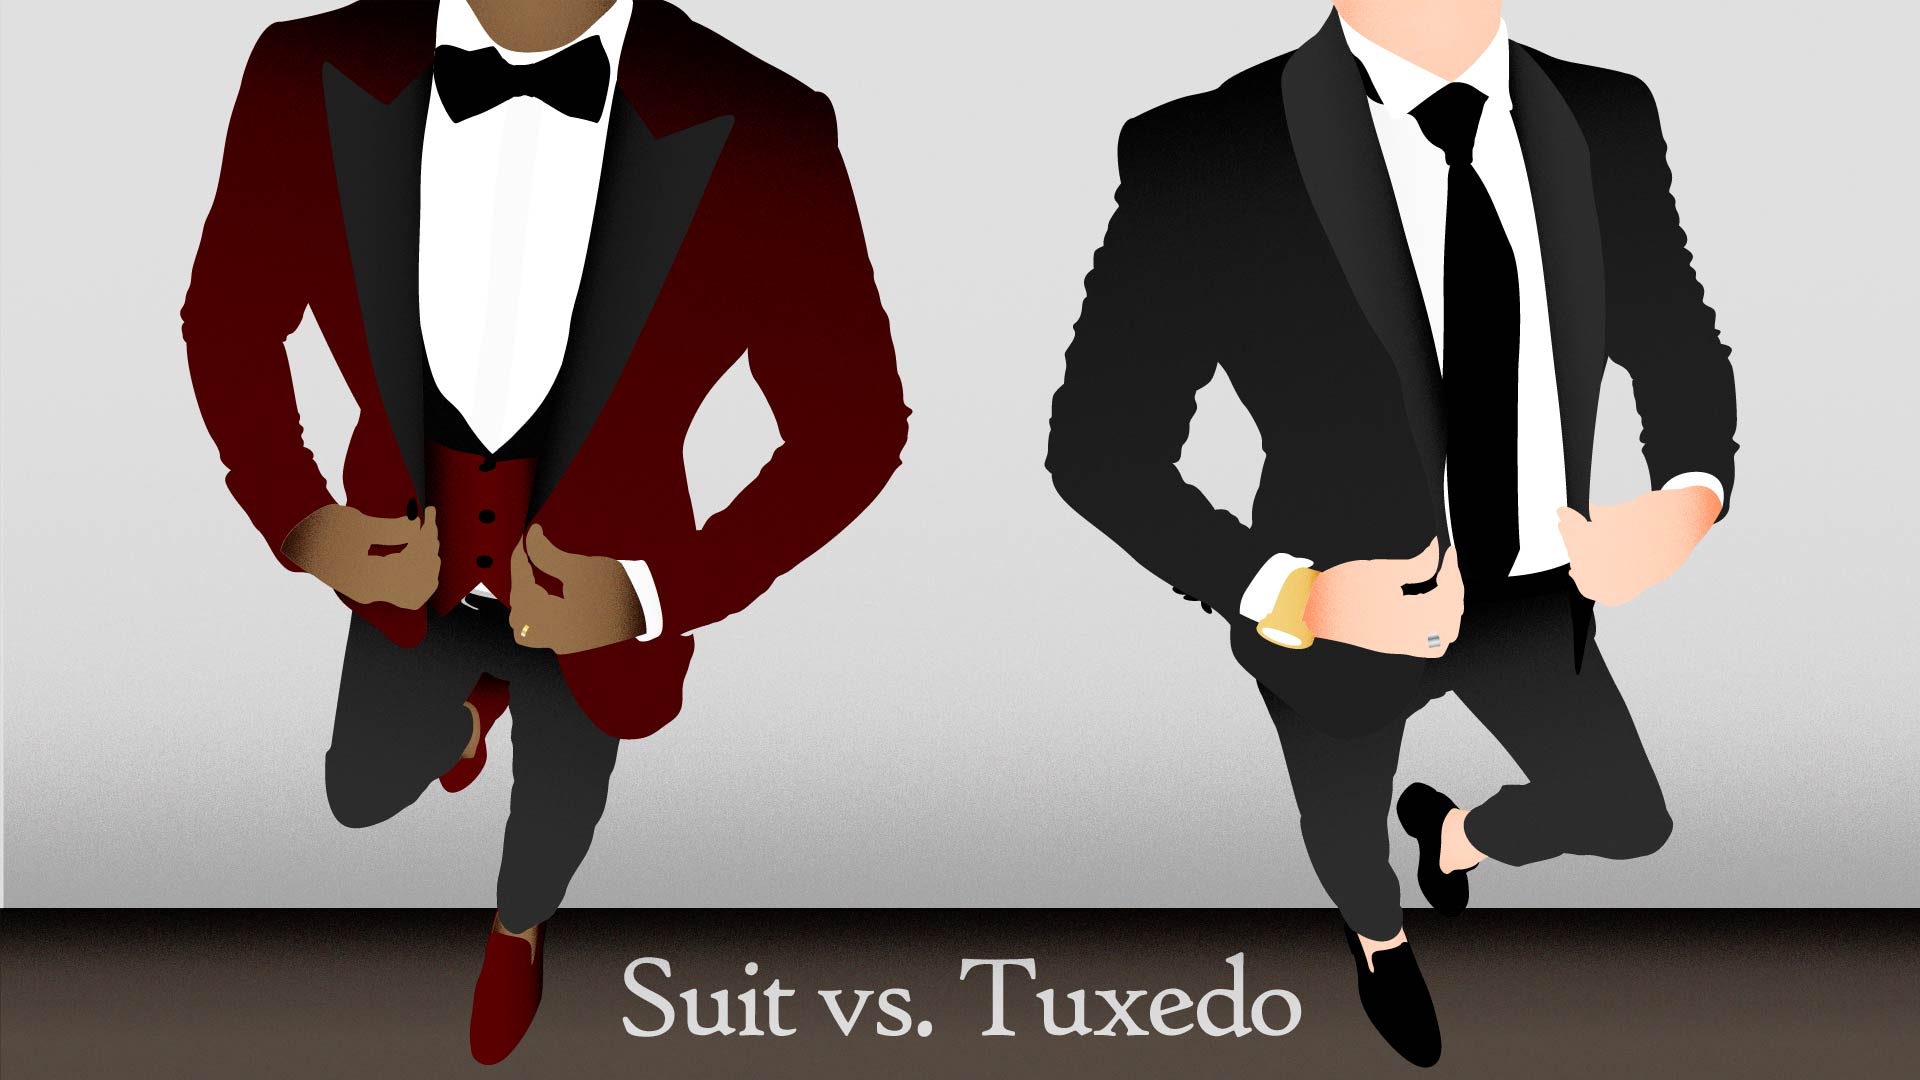 Should the Groom Wear a Suit or Tuxedo?